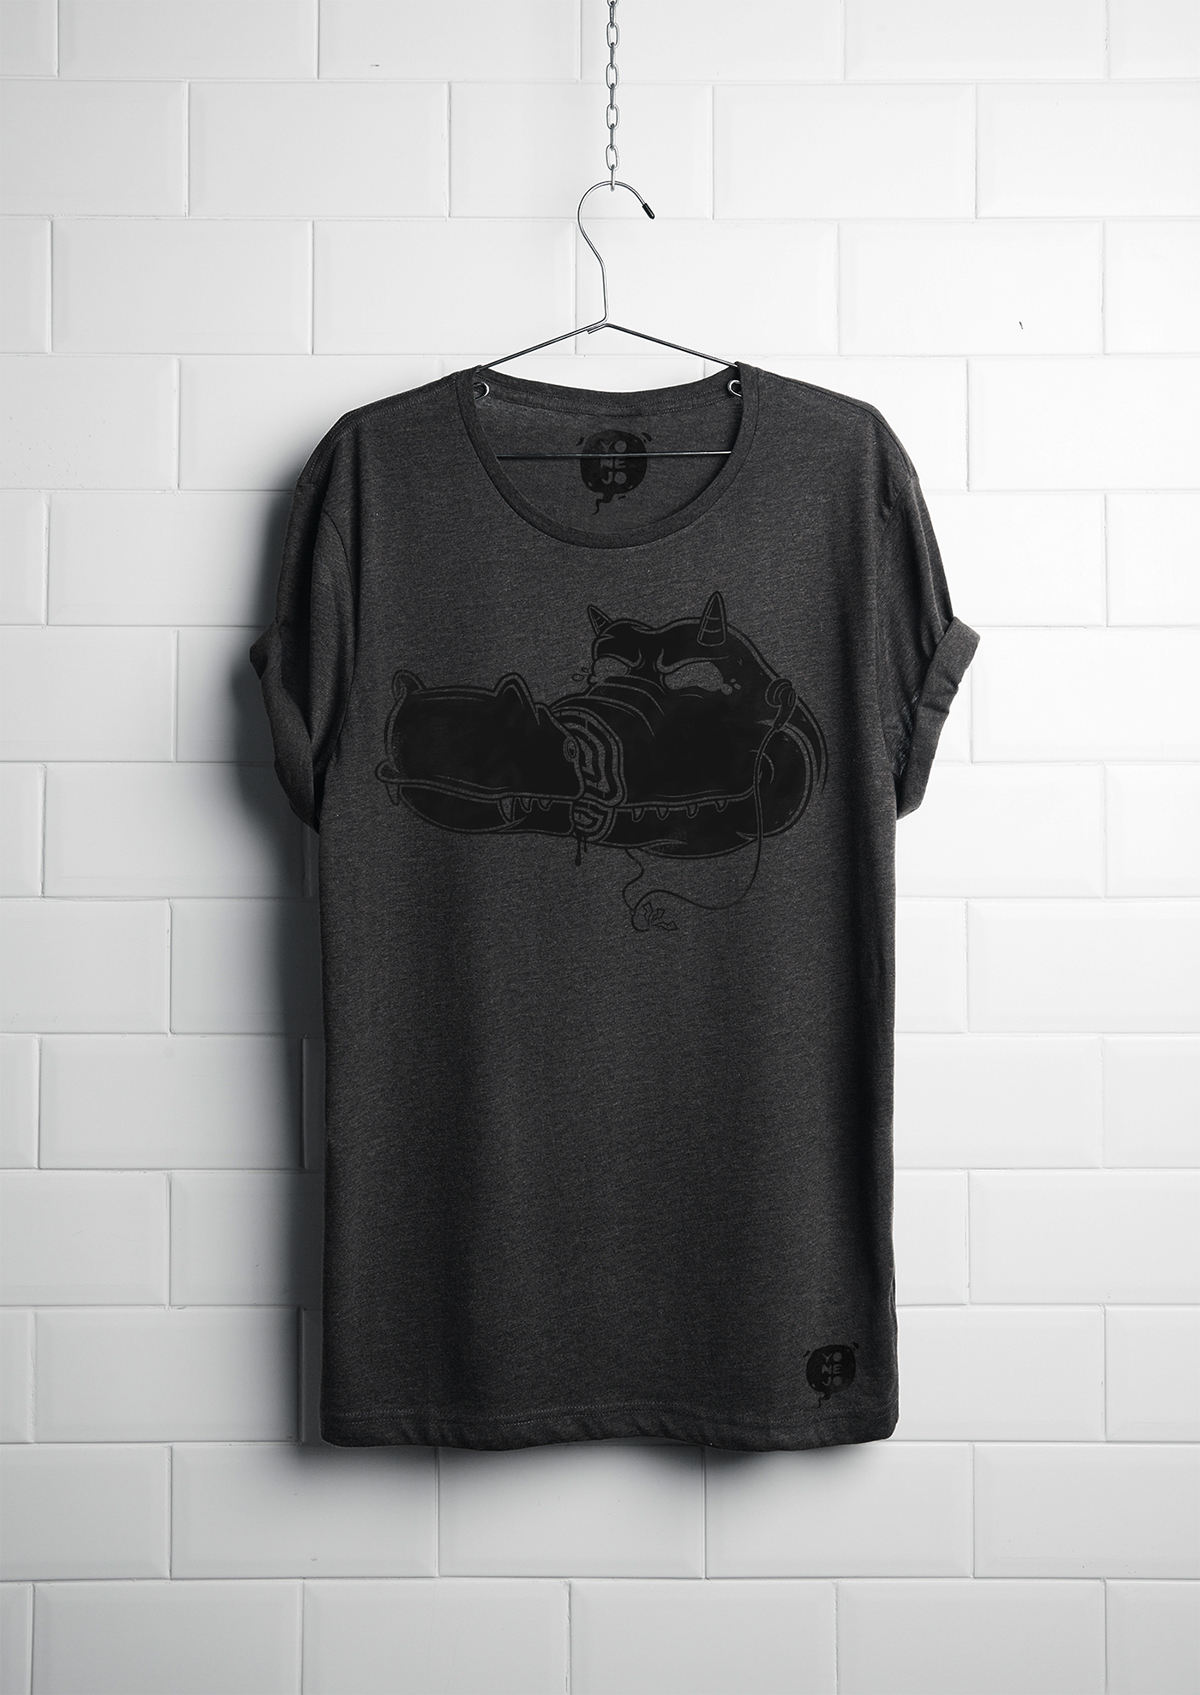 Cat puma shirt screen gray crocodile wildcat cocodrilo camisetas serigrafia oldschool vector black wild animals